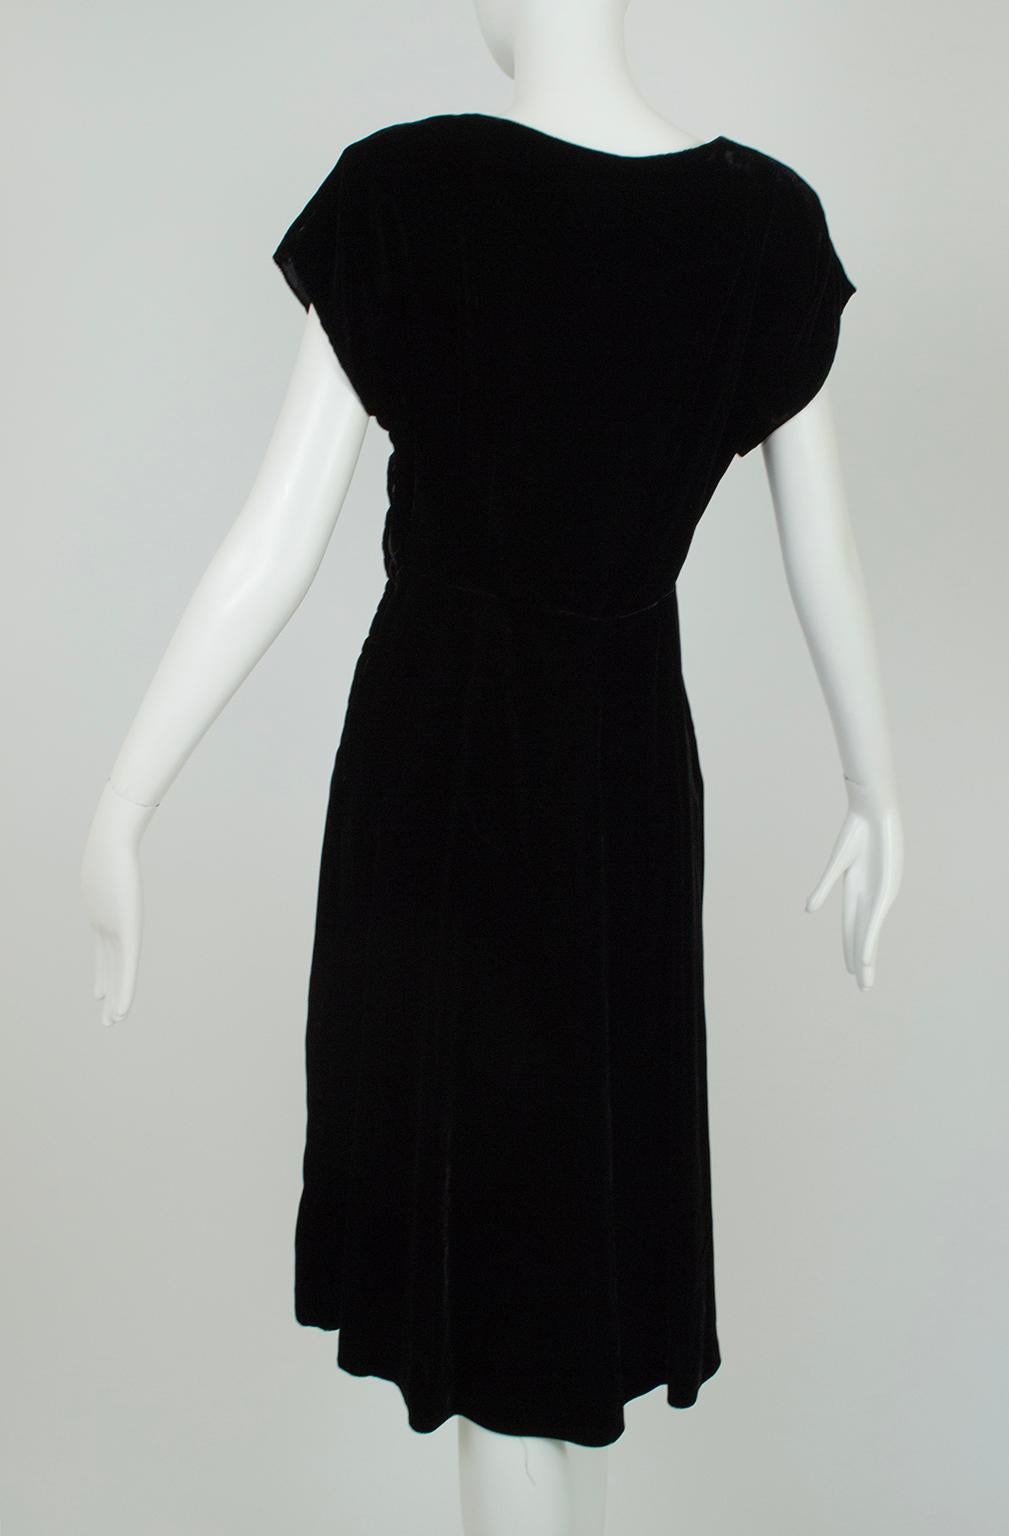 Pre-War Black Velvet Art Deco Bead and Rhinestone Cocktail Dress – L, 1940s For Sale 2